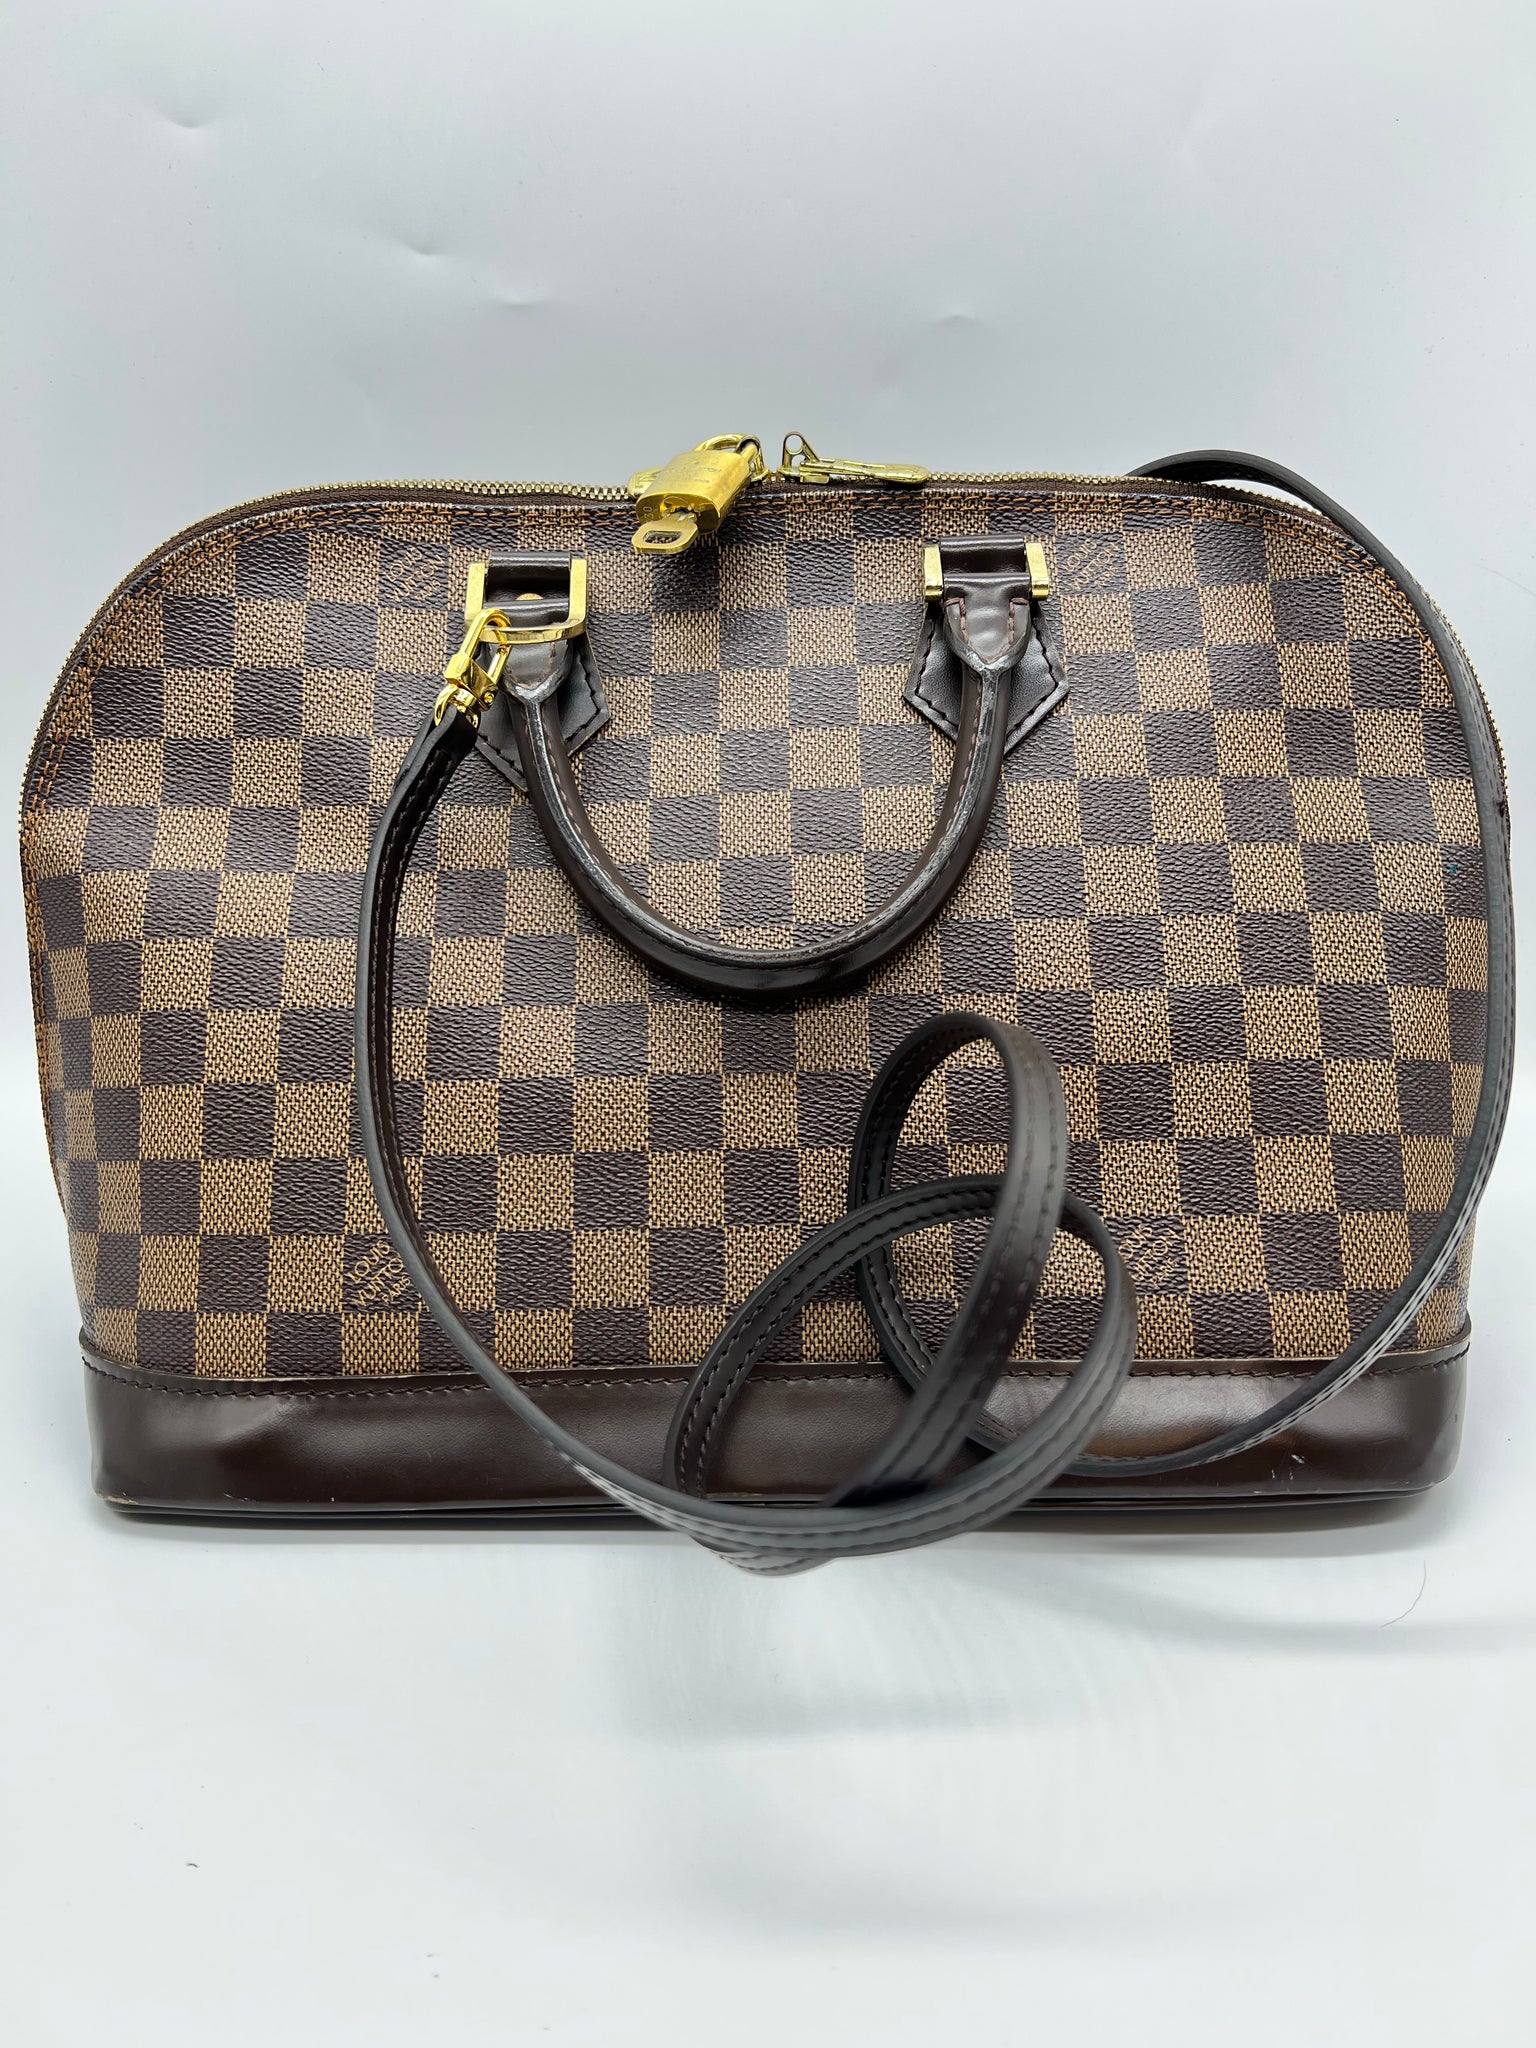 58cm Genuine Leather Purse Strap for Handbag | eBay